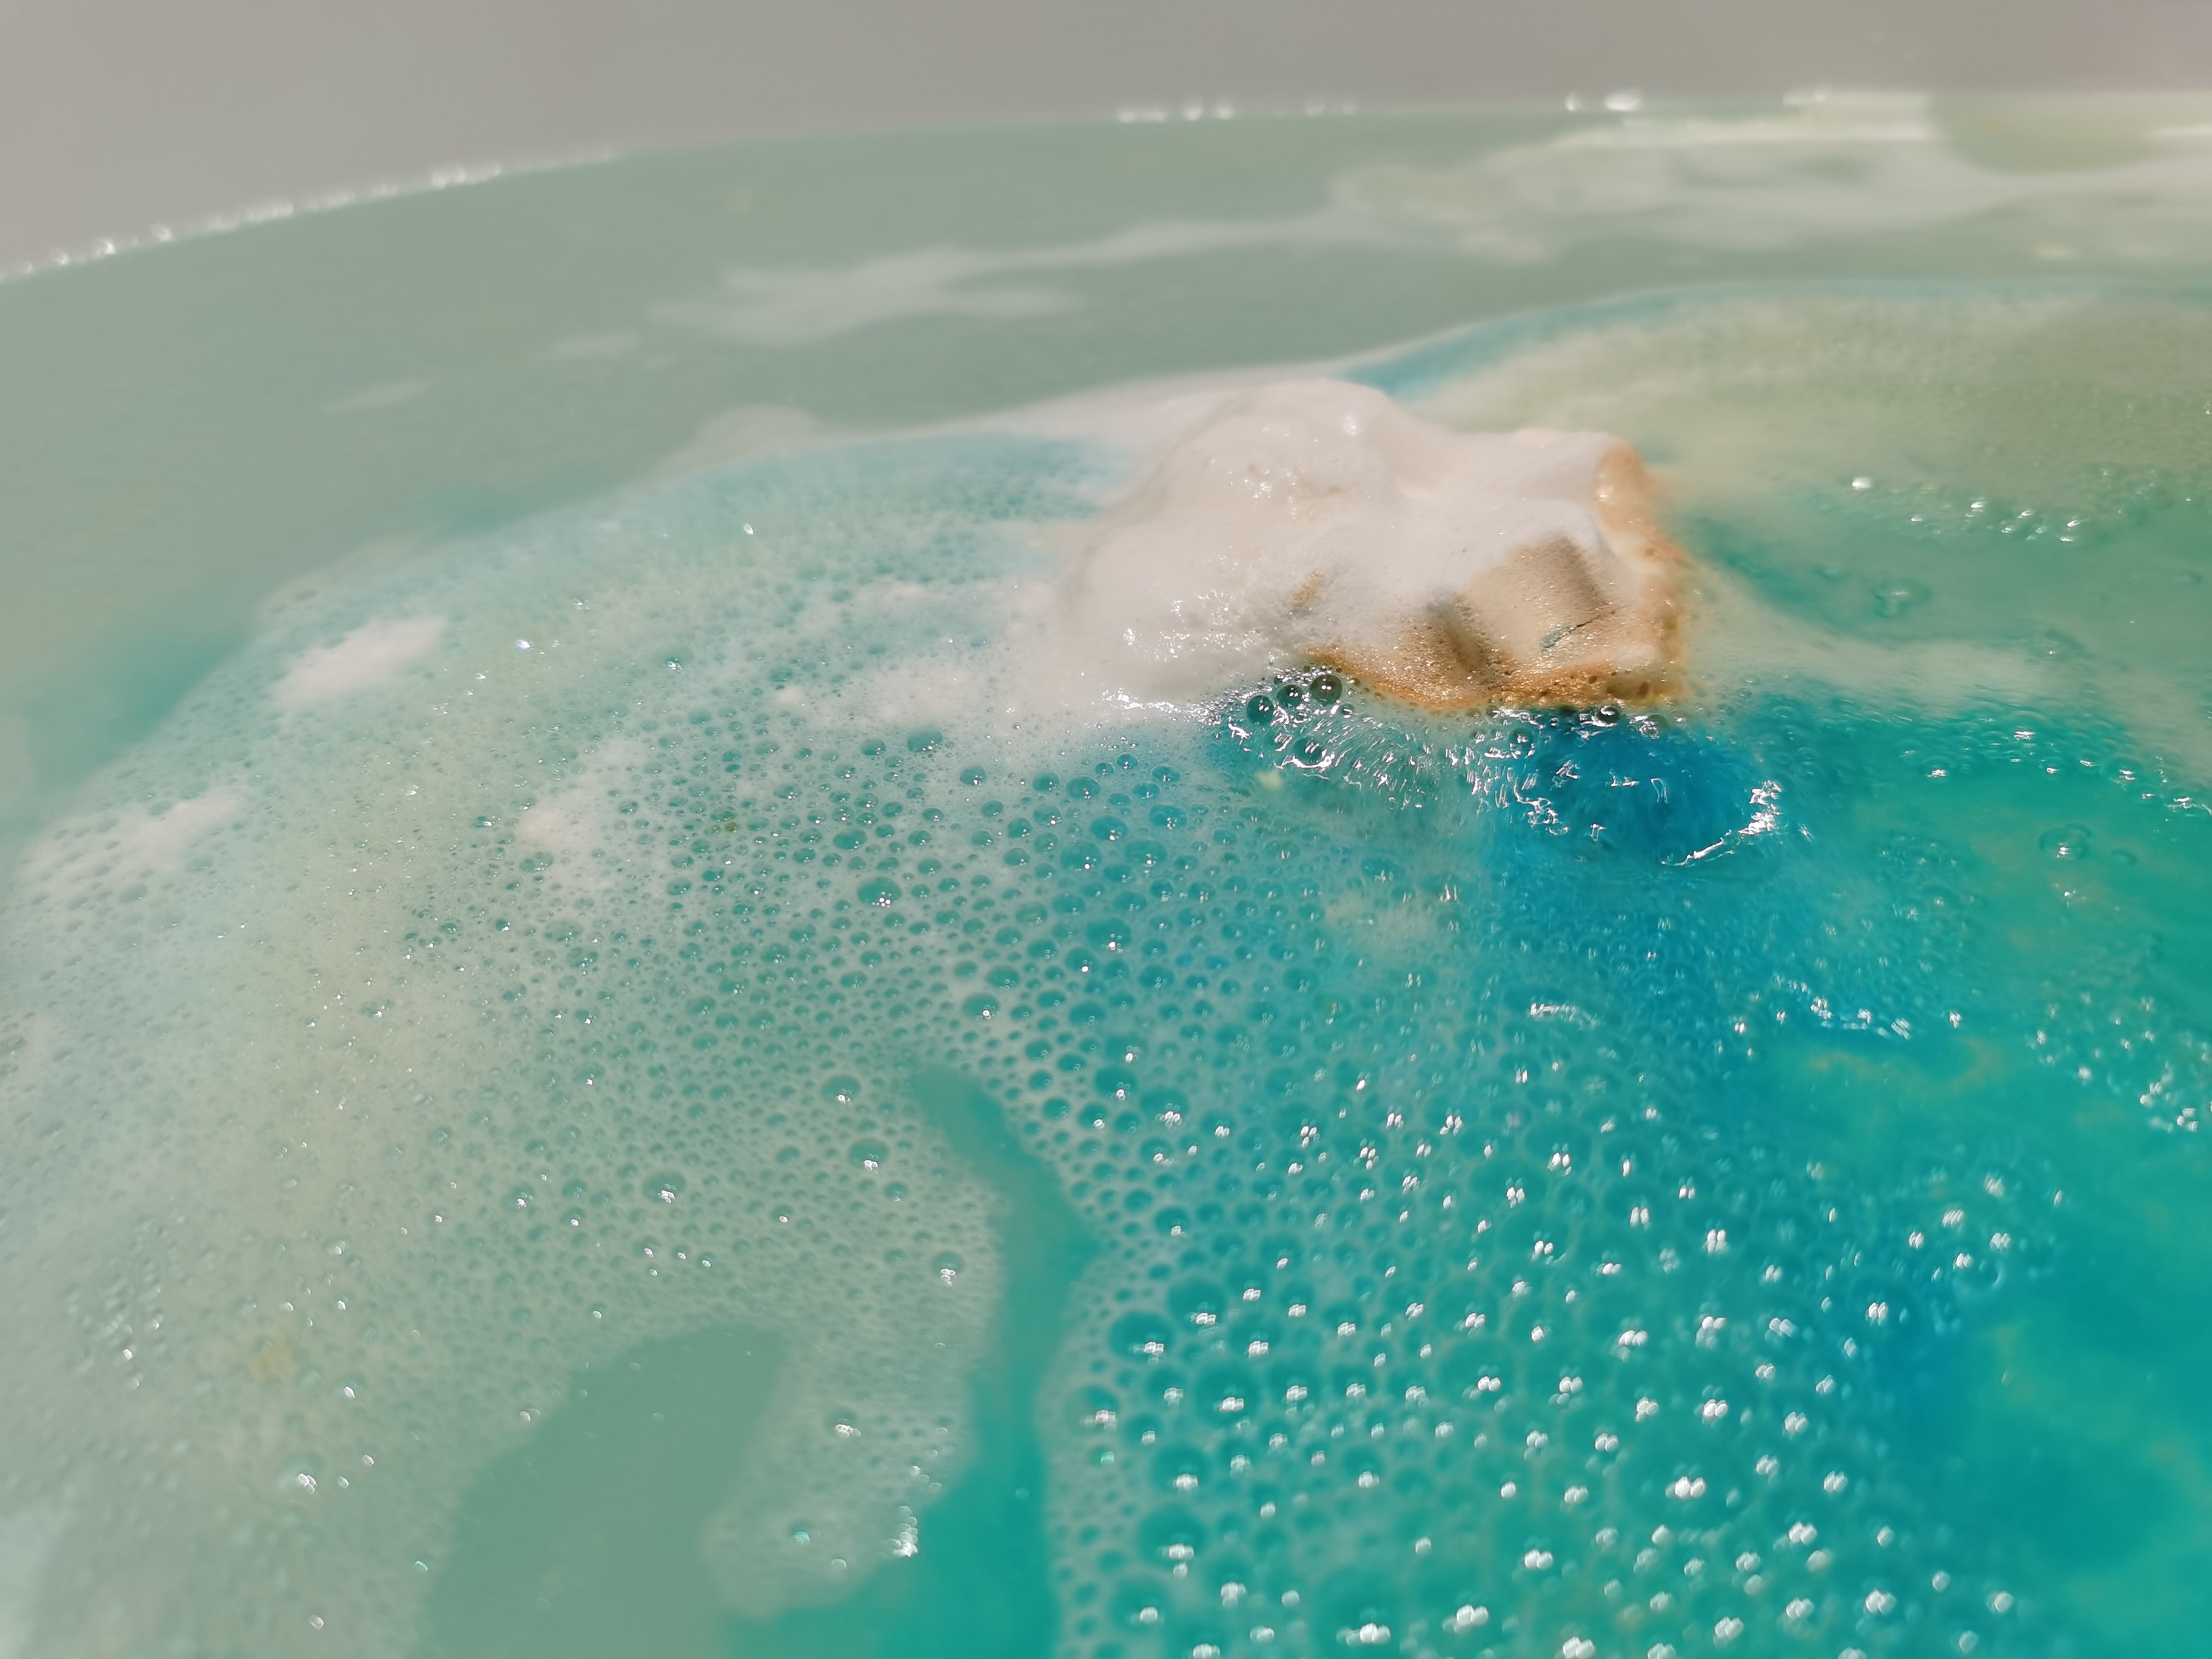 Golden Wonder Bath Bomb by Lush dissolving into blue water